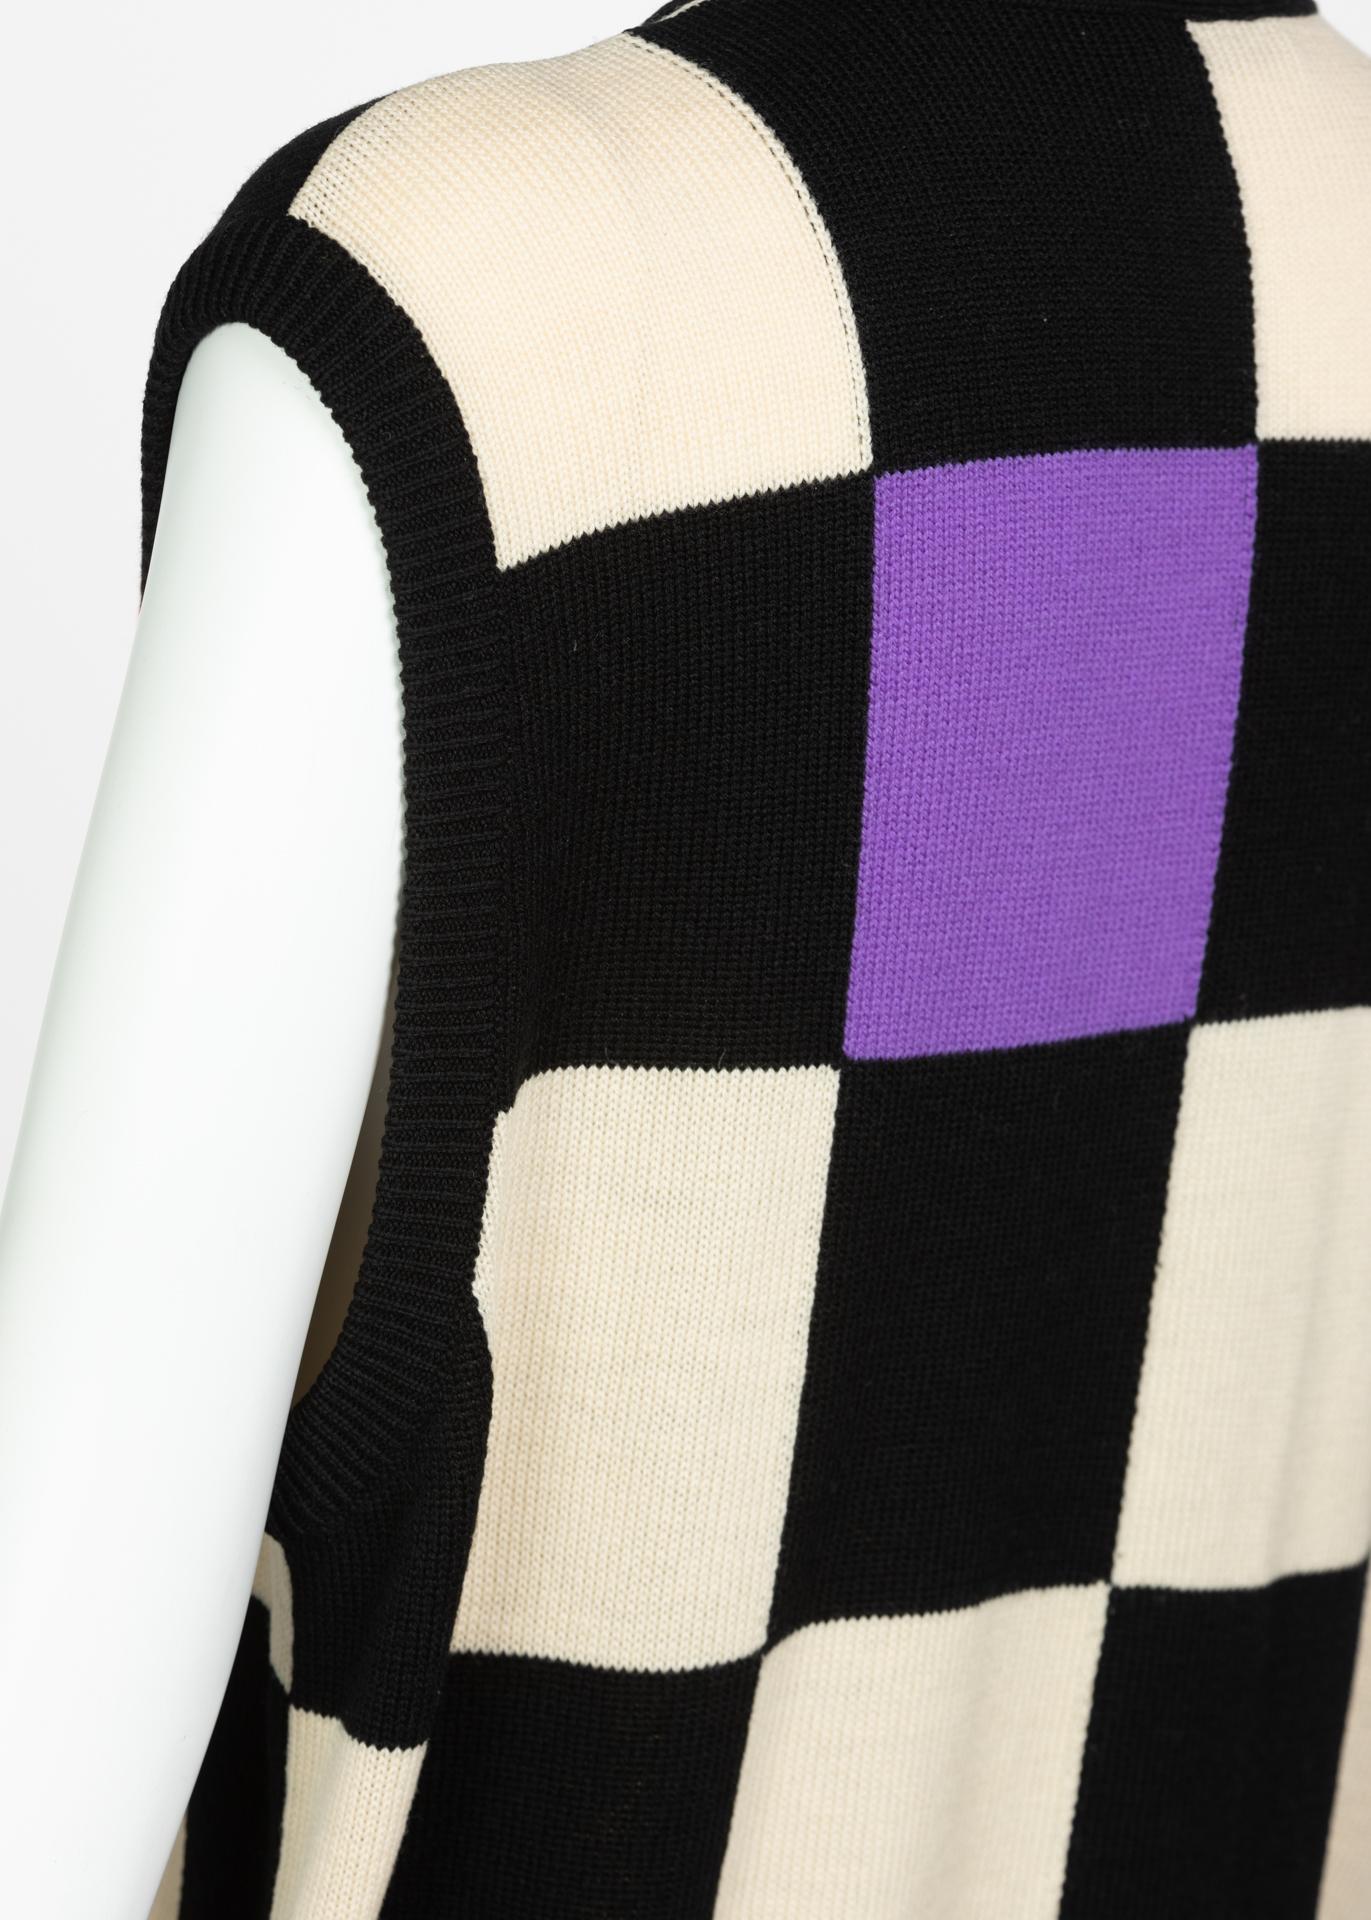 Women's or Men's Gianni Versace Colorblock Sweater Vest, 1980s For Sale